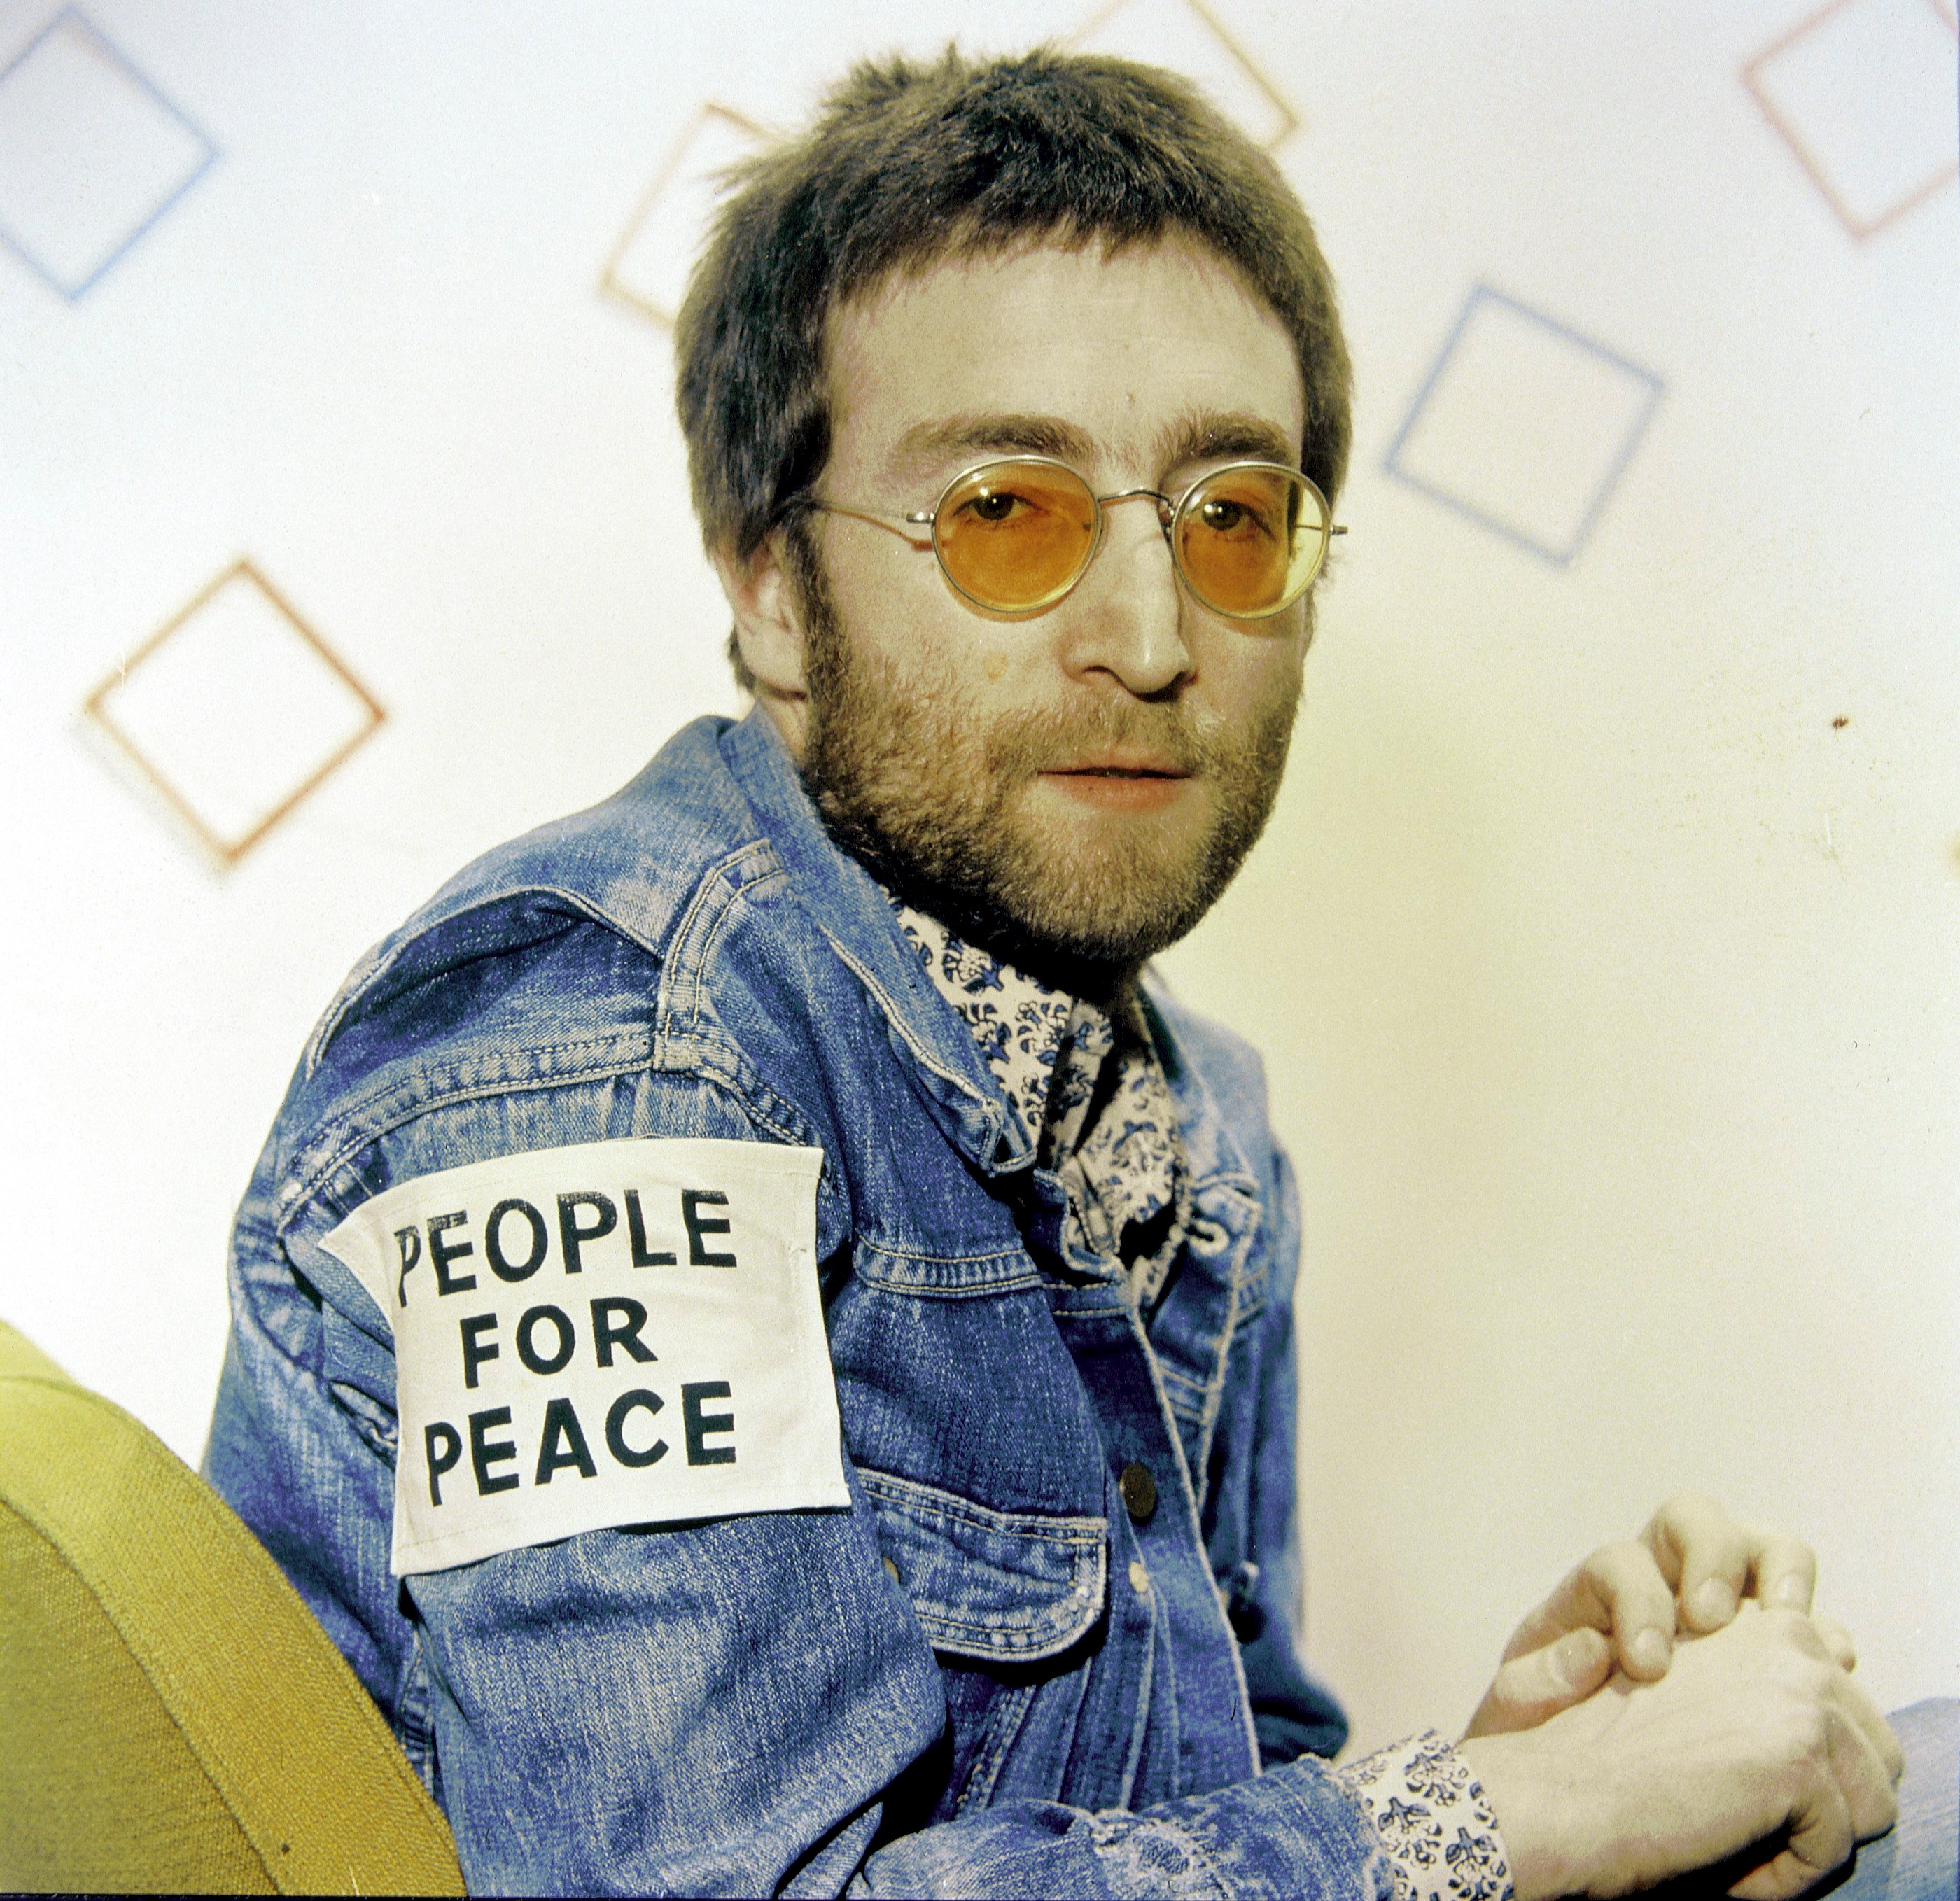 John Lennon of The Beatles wears blue